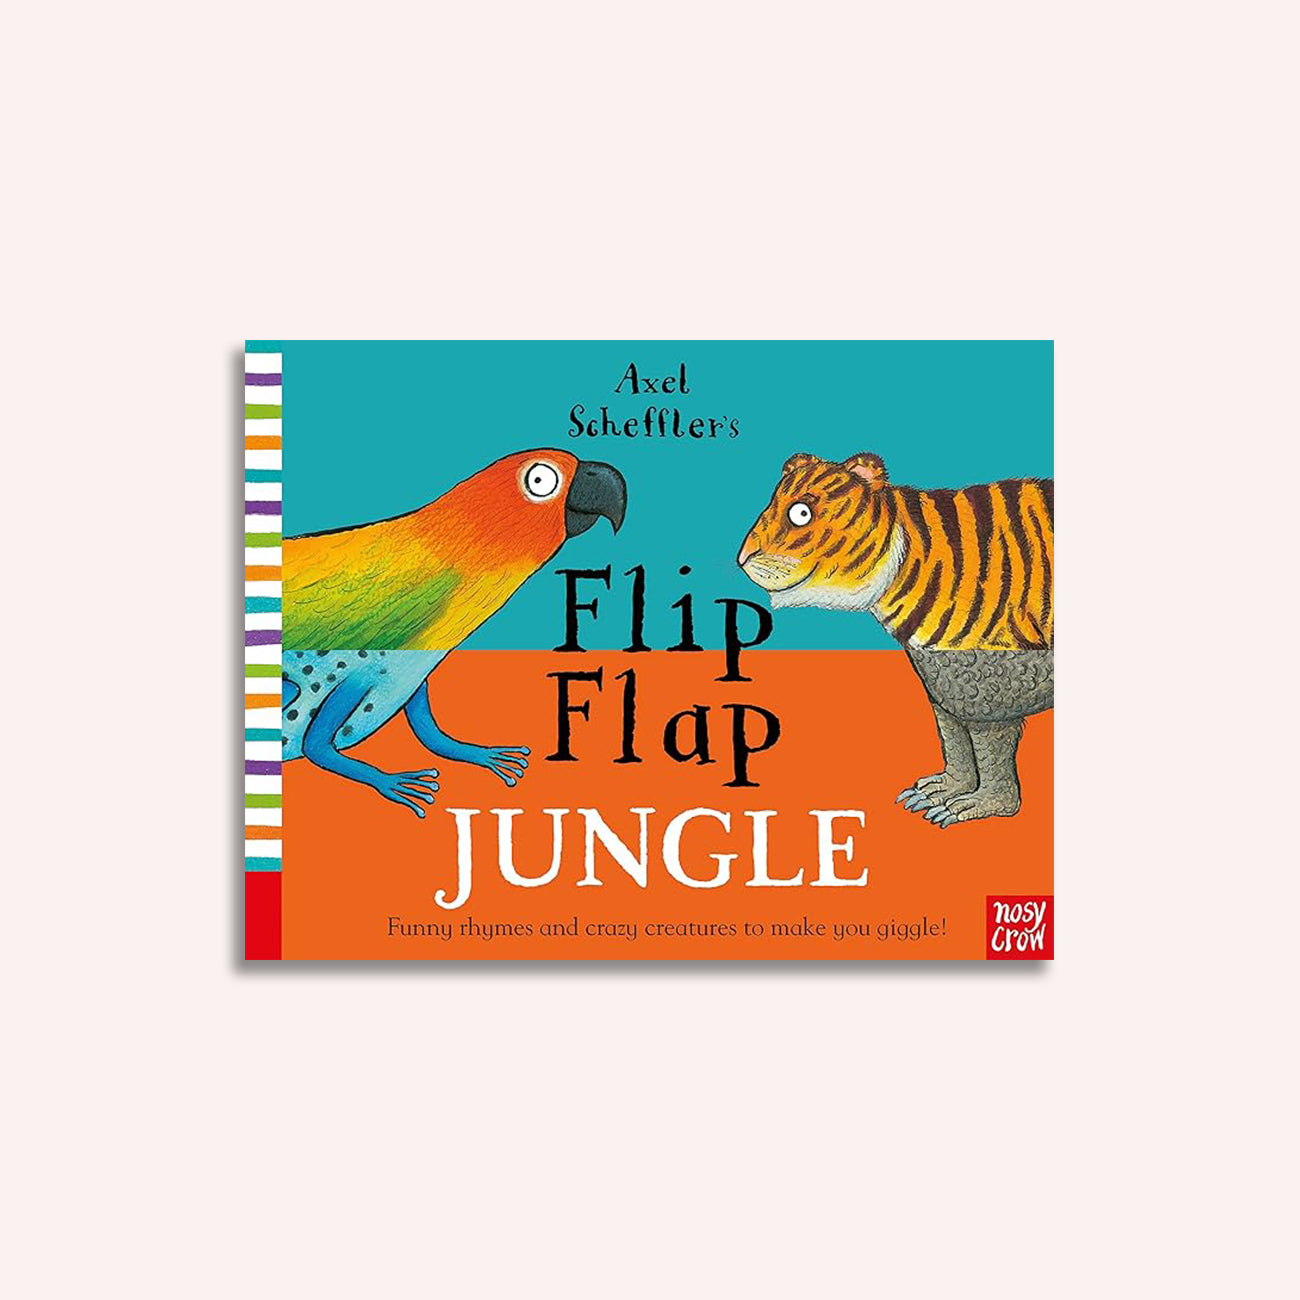 Flip Flap Jungle